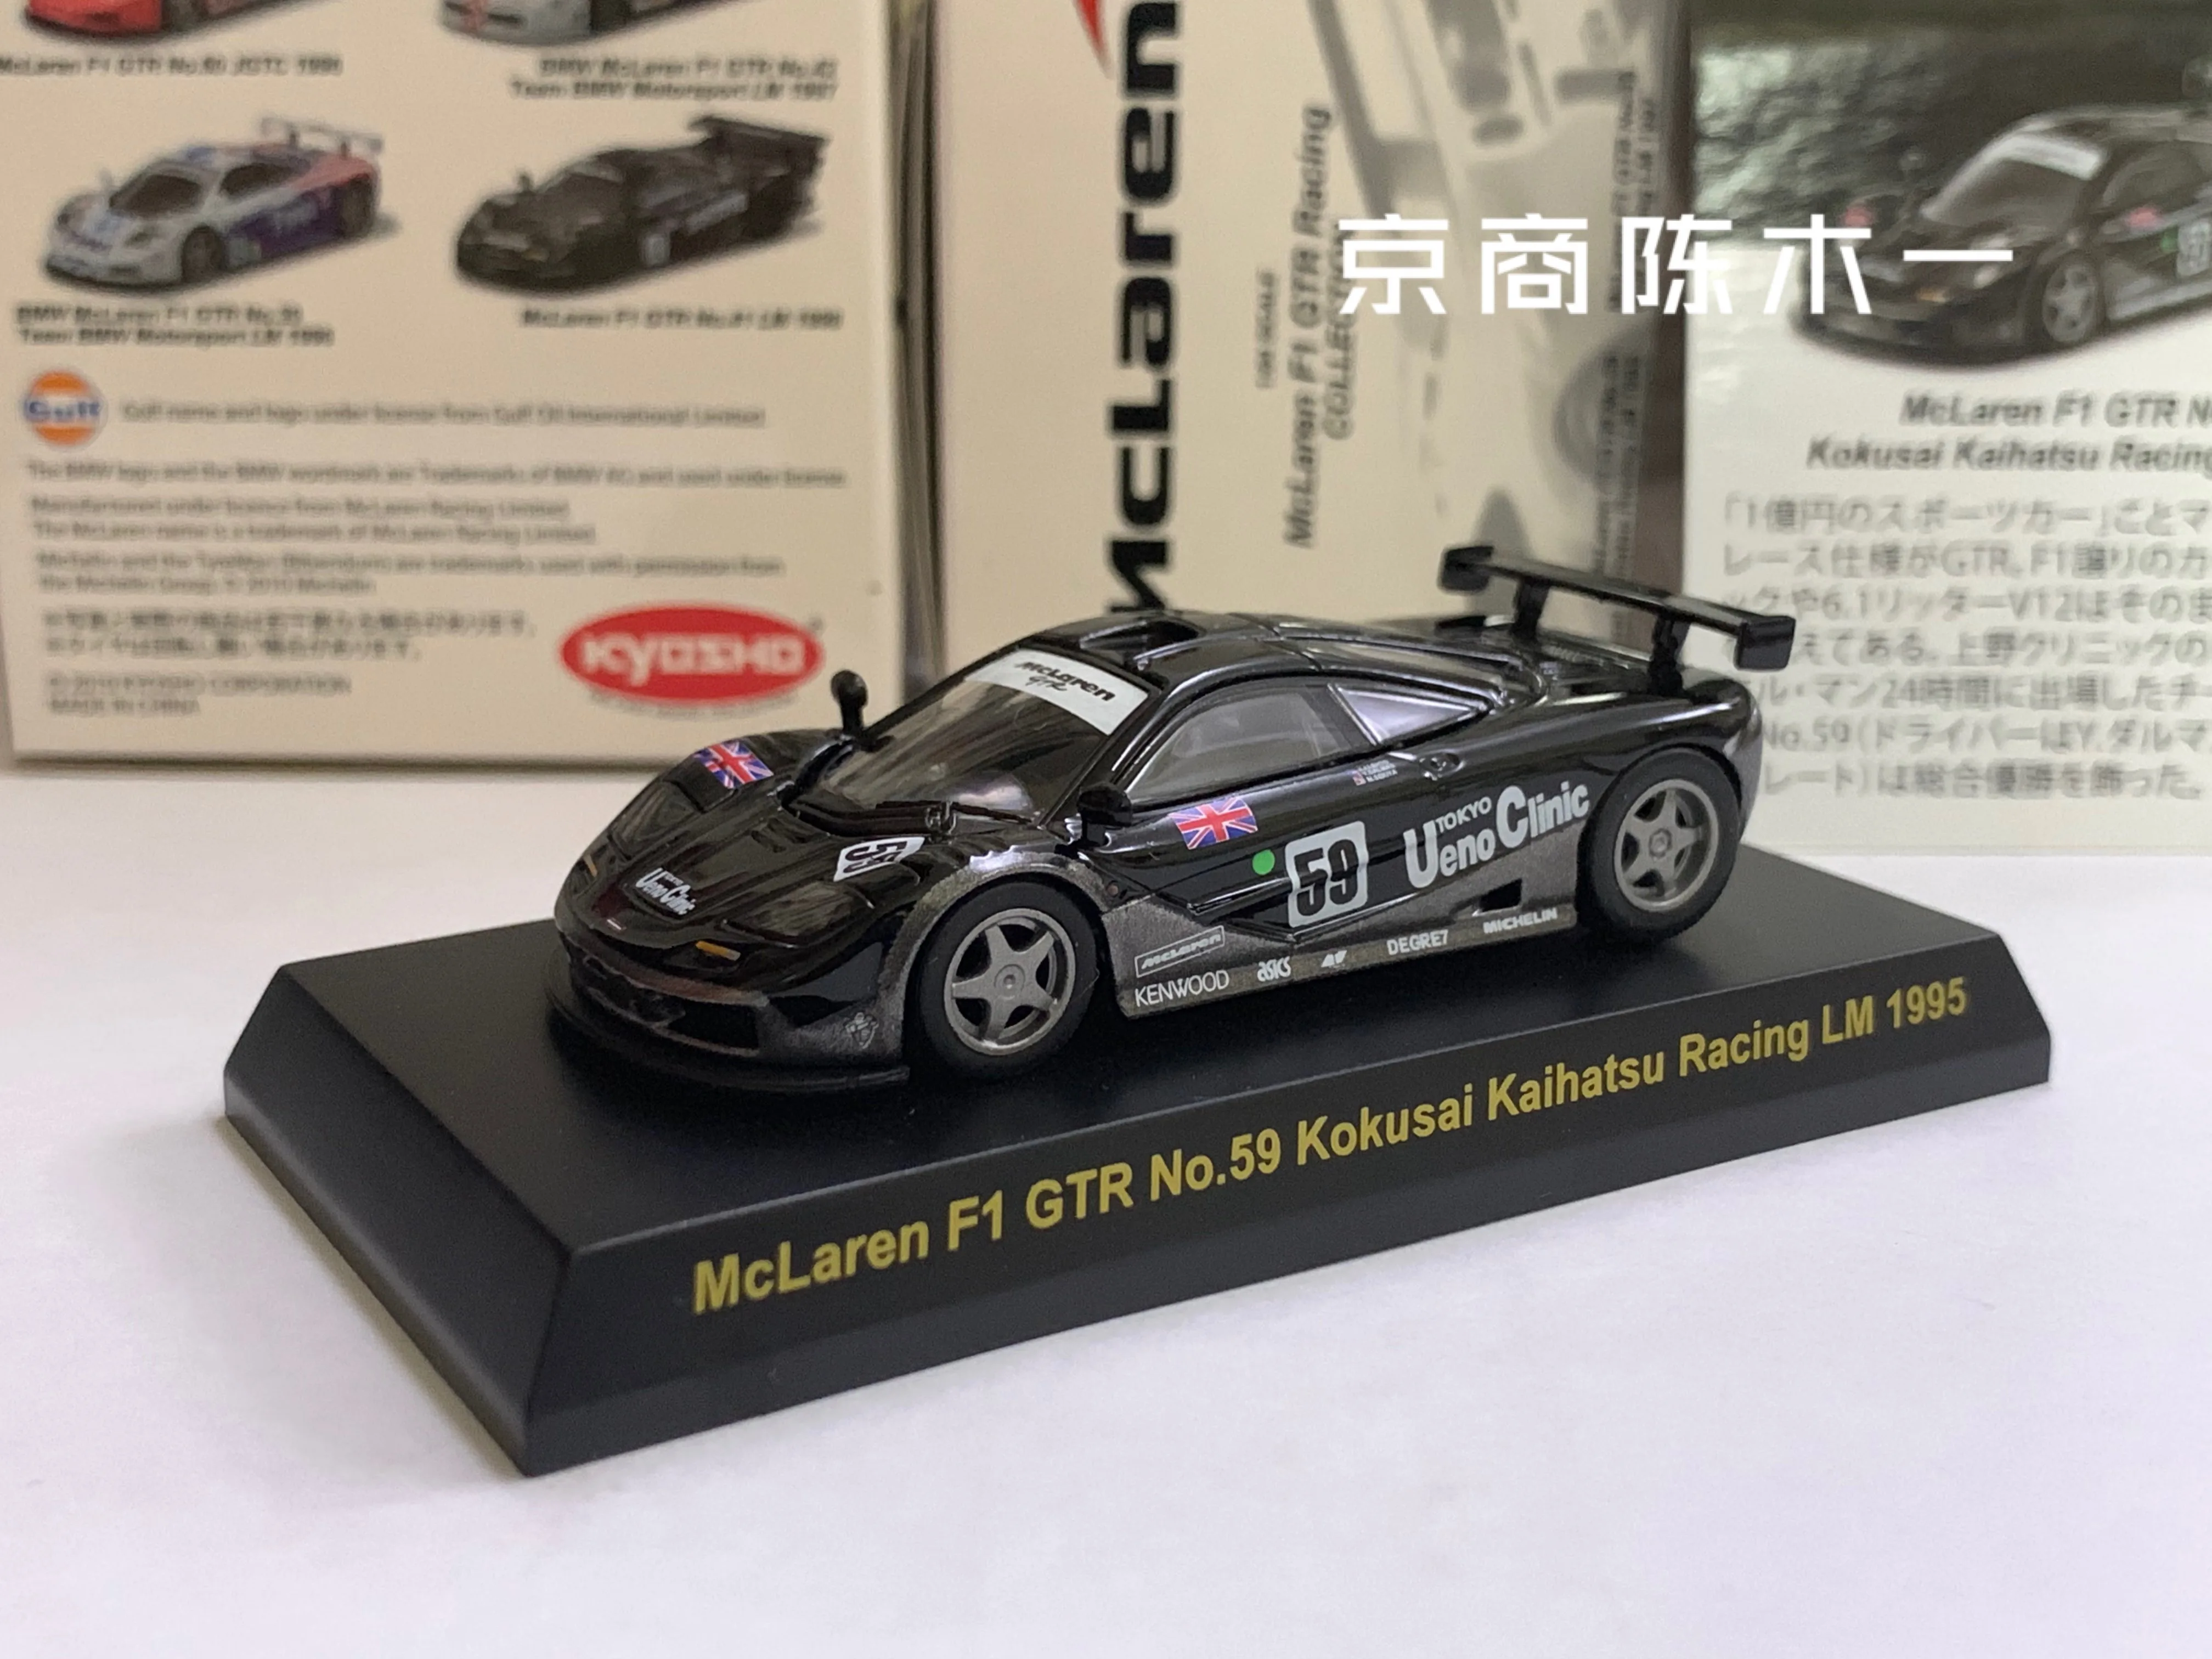 

1/64 KYOSHO McLaren F1 GTR #59 kokusai kaihatsu racing LM 1995 Collect die casting alloy trolley model